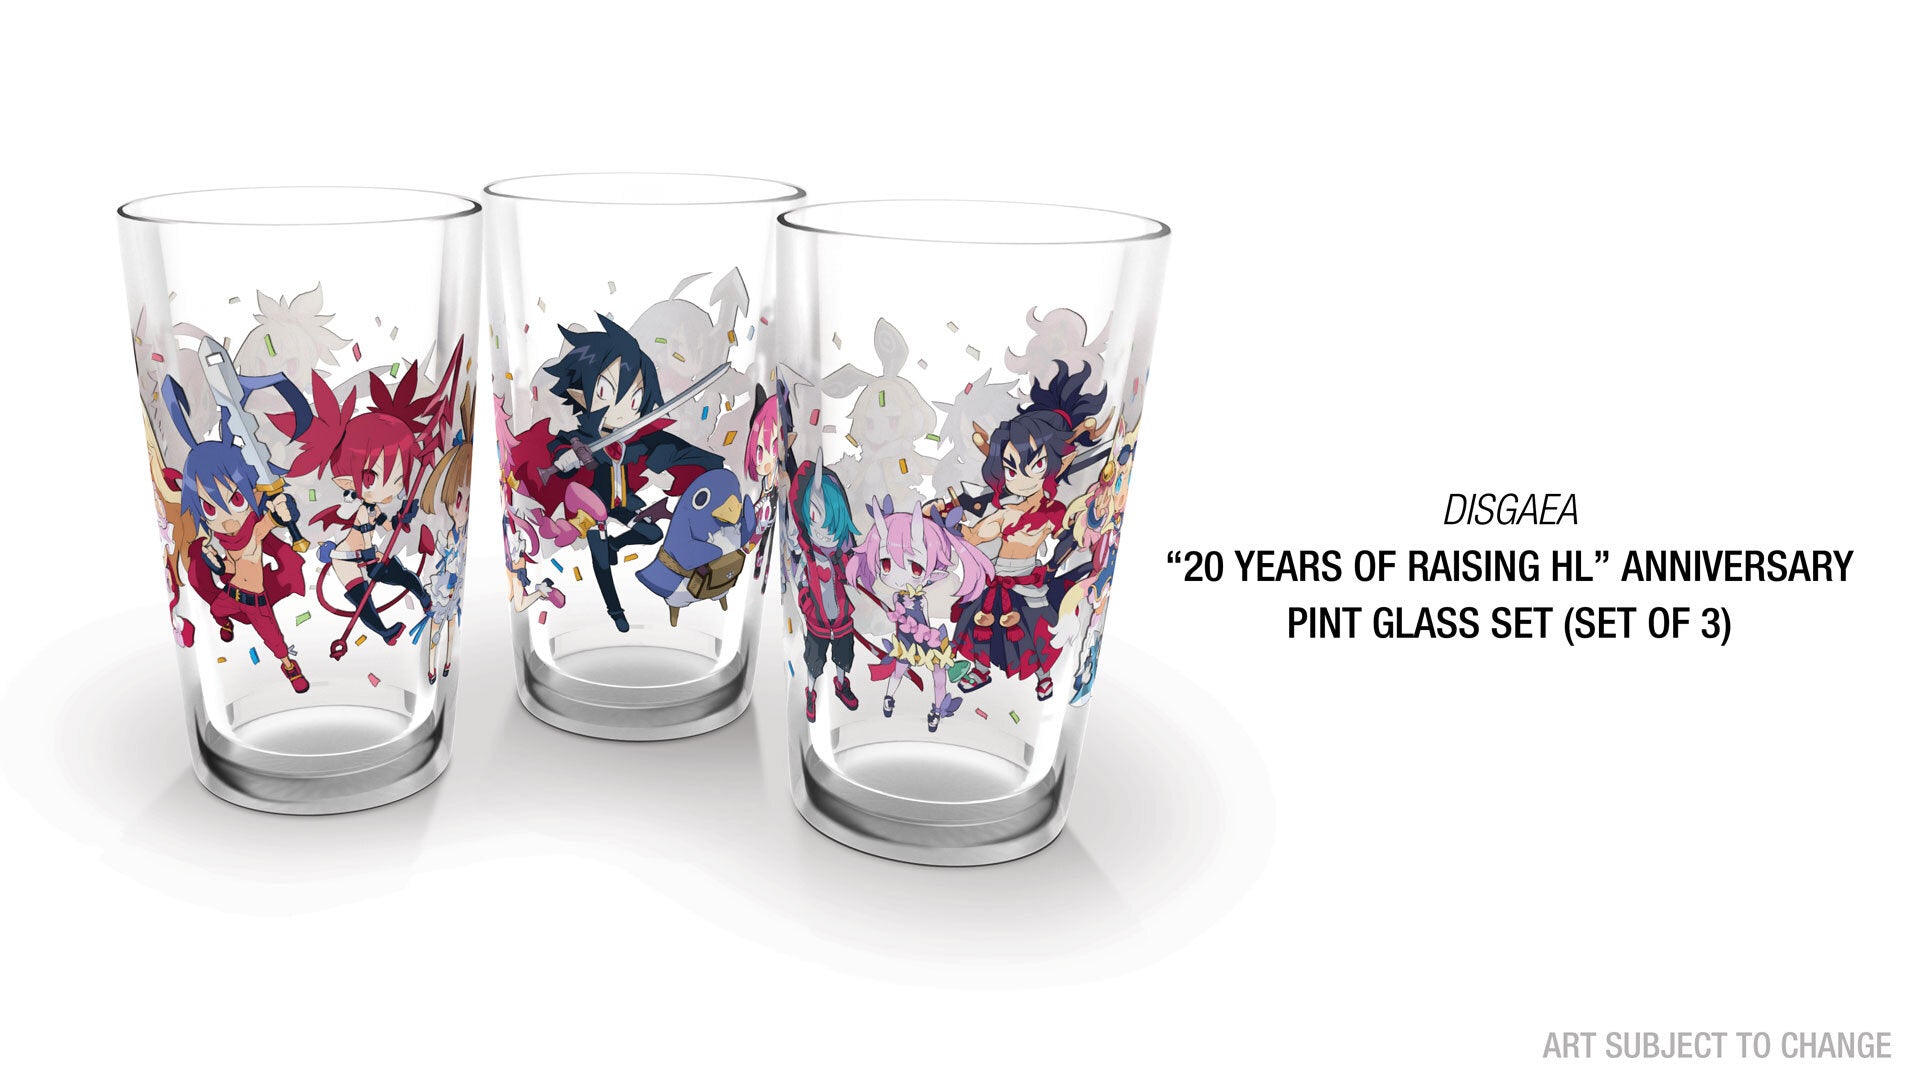 Disgaea "20 Years of Raising HL" Anniversary Pint Glass Set (Set of 3)